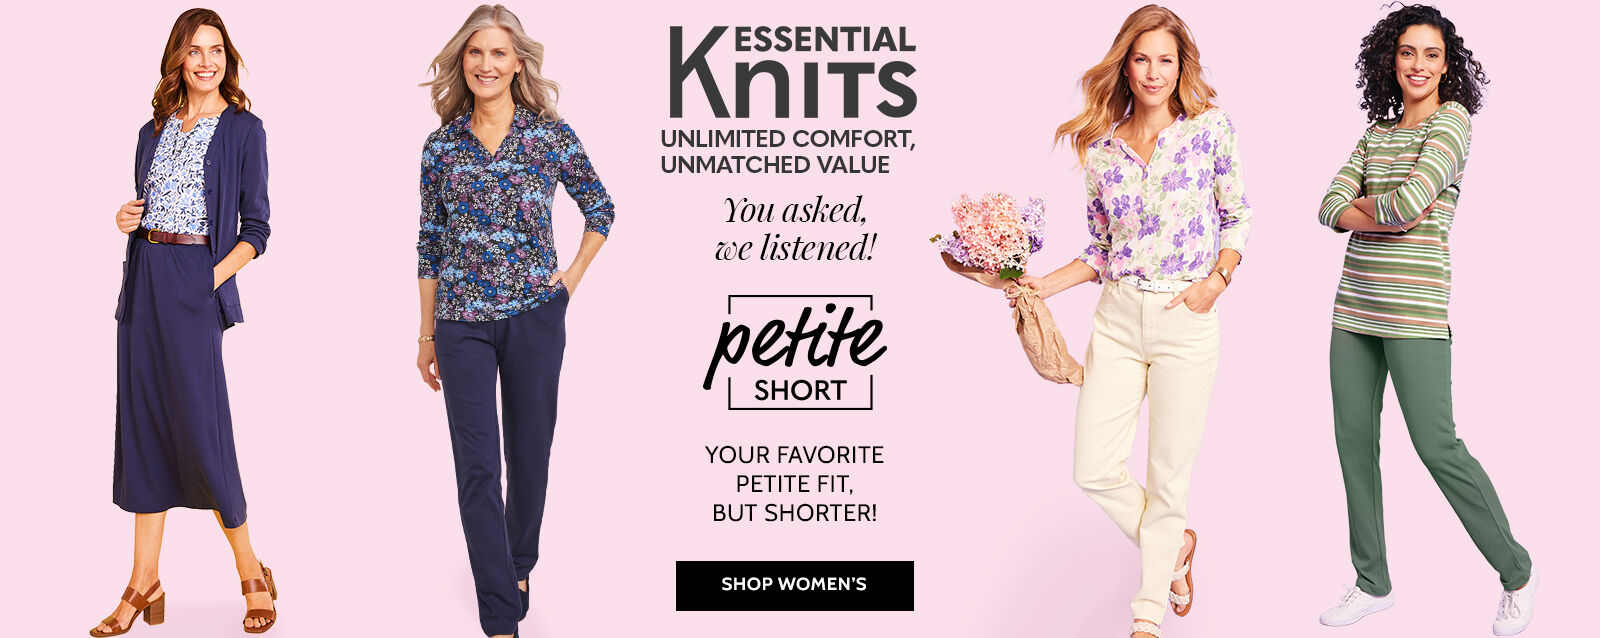 essential knits unlimited comfort, unmatched value petite short your favorite fit, but shorter shop women's